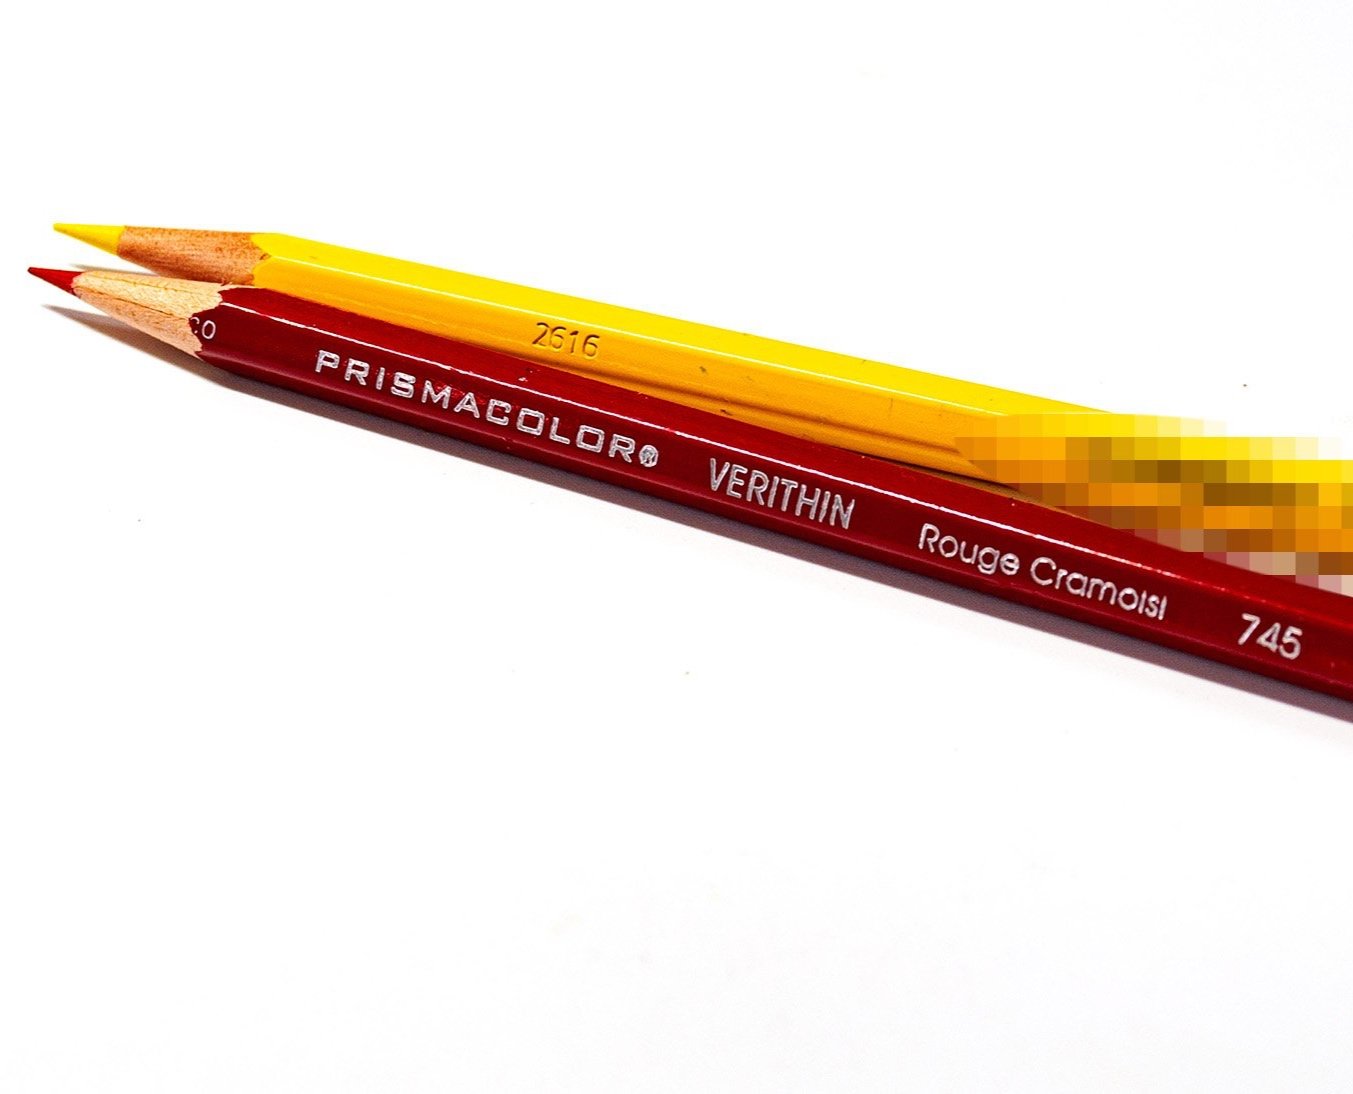 My NEW Favorite Art Supply!?(Prismacolor Col-Erase Erasable Colored Pencil  Review) – Acoustic Painters